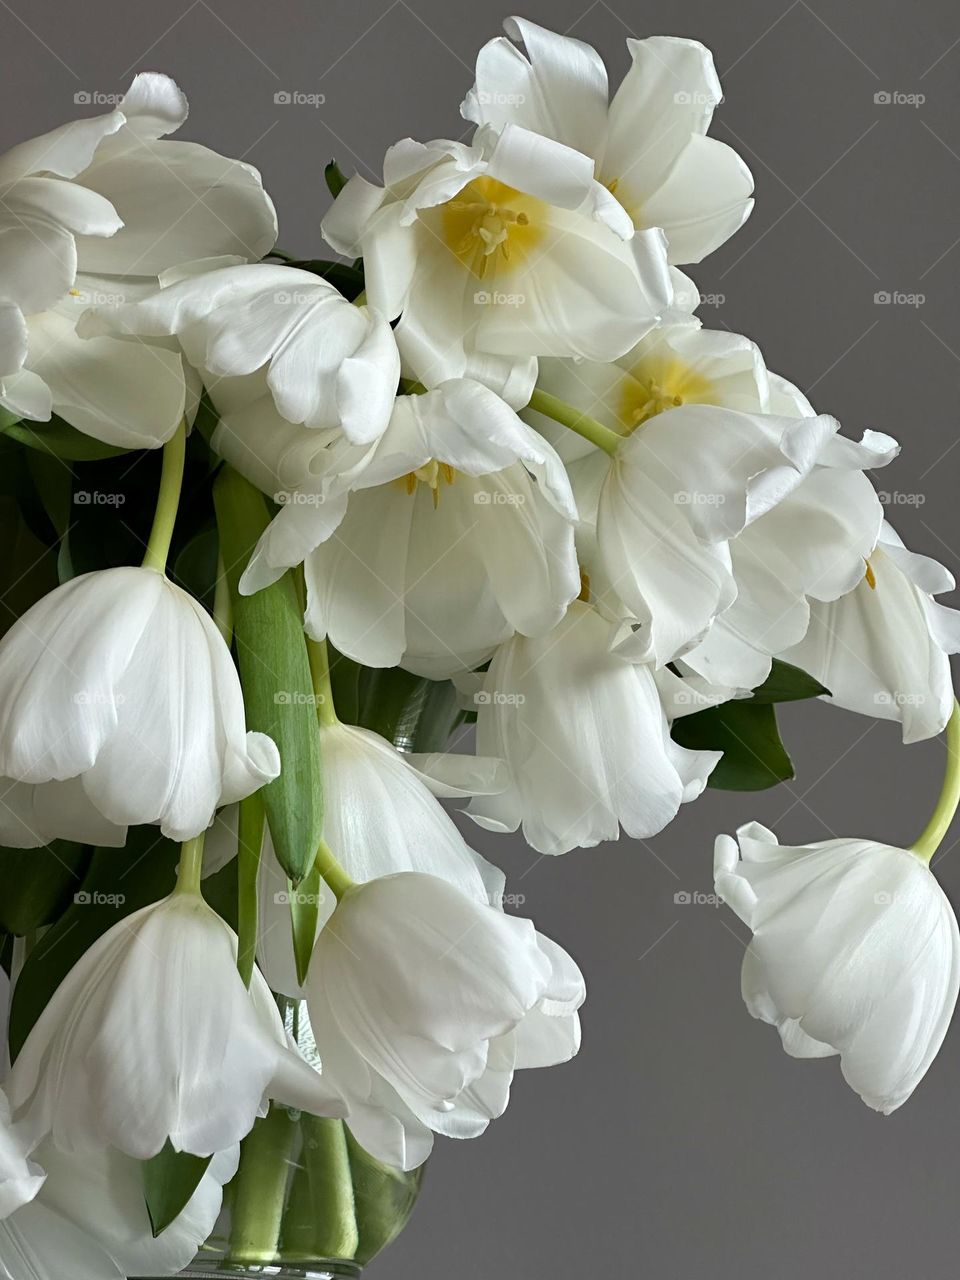 White tulips in a vase 